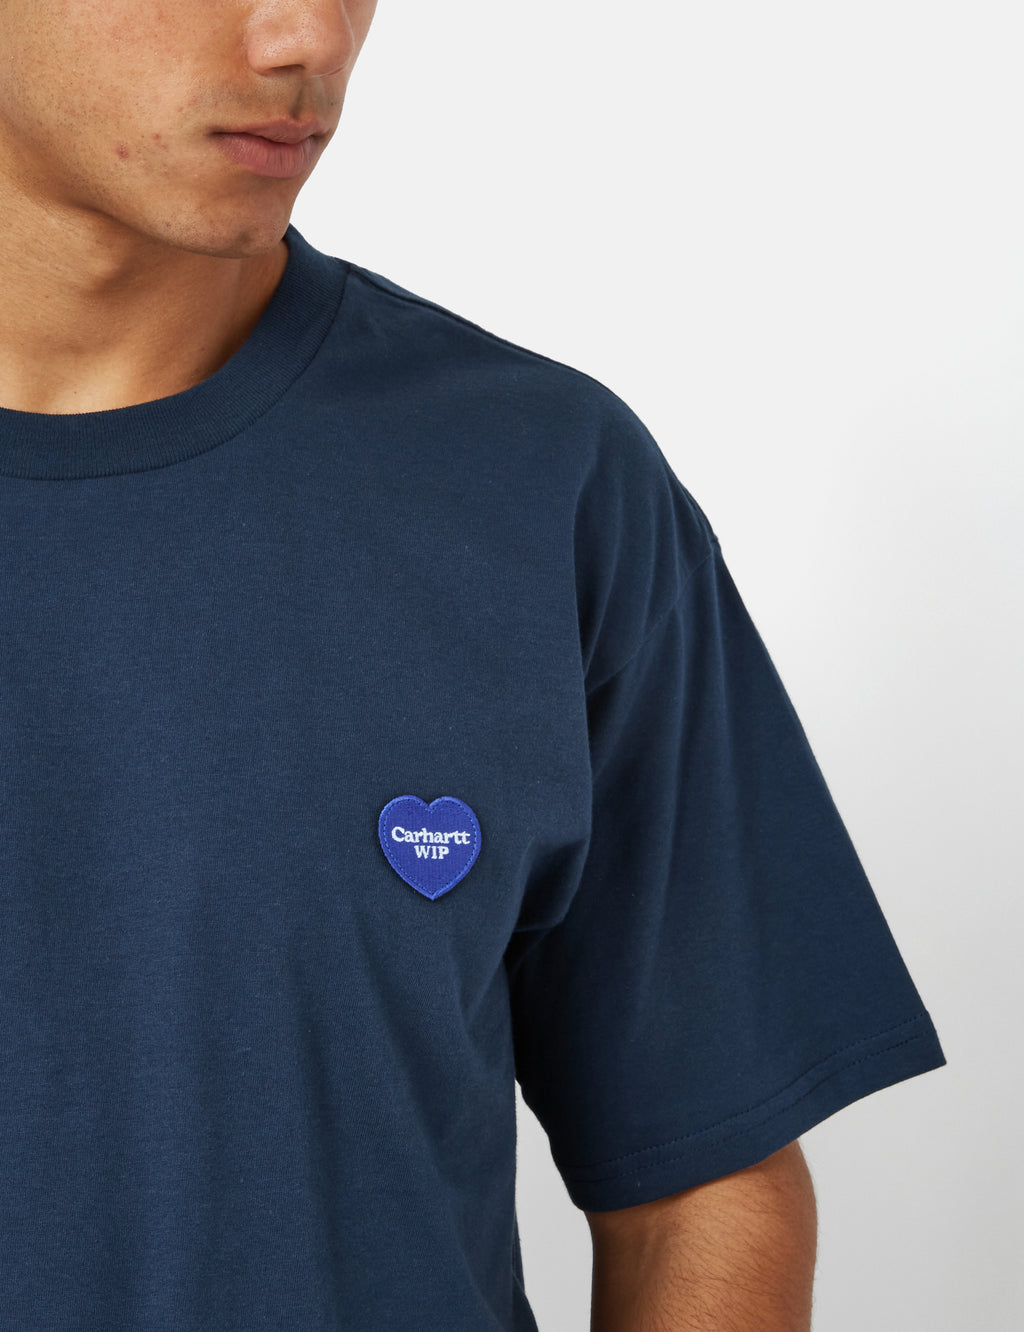 - T-Shirt EXCESS Double (Organic) URBAN Blue Urban Excess. Carhartt-WIP Heart – I